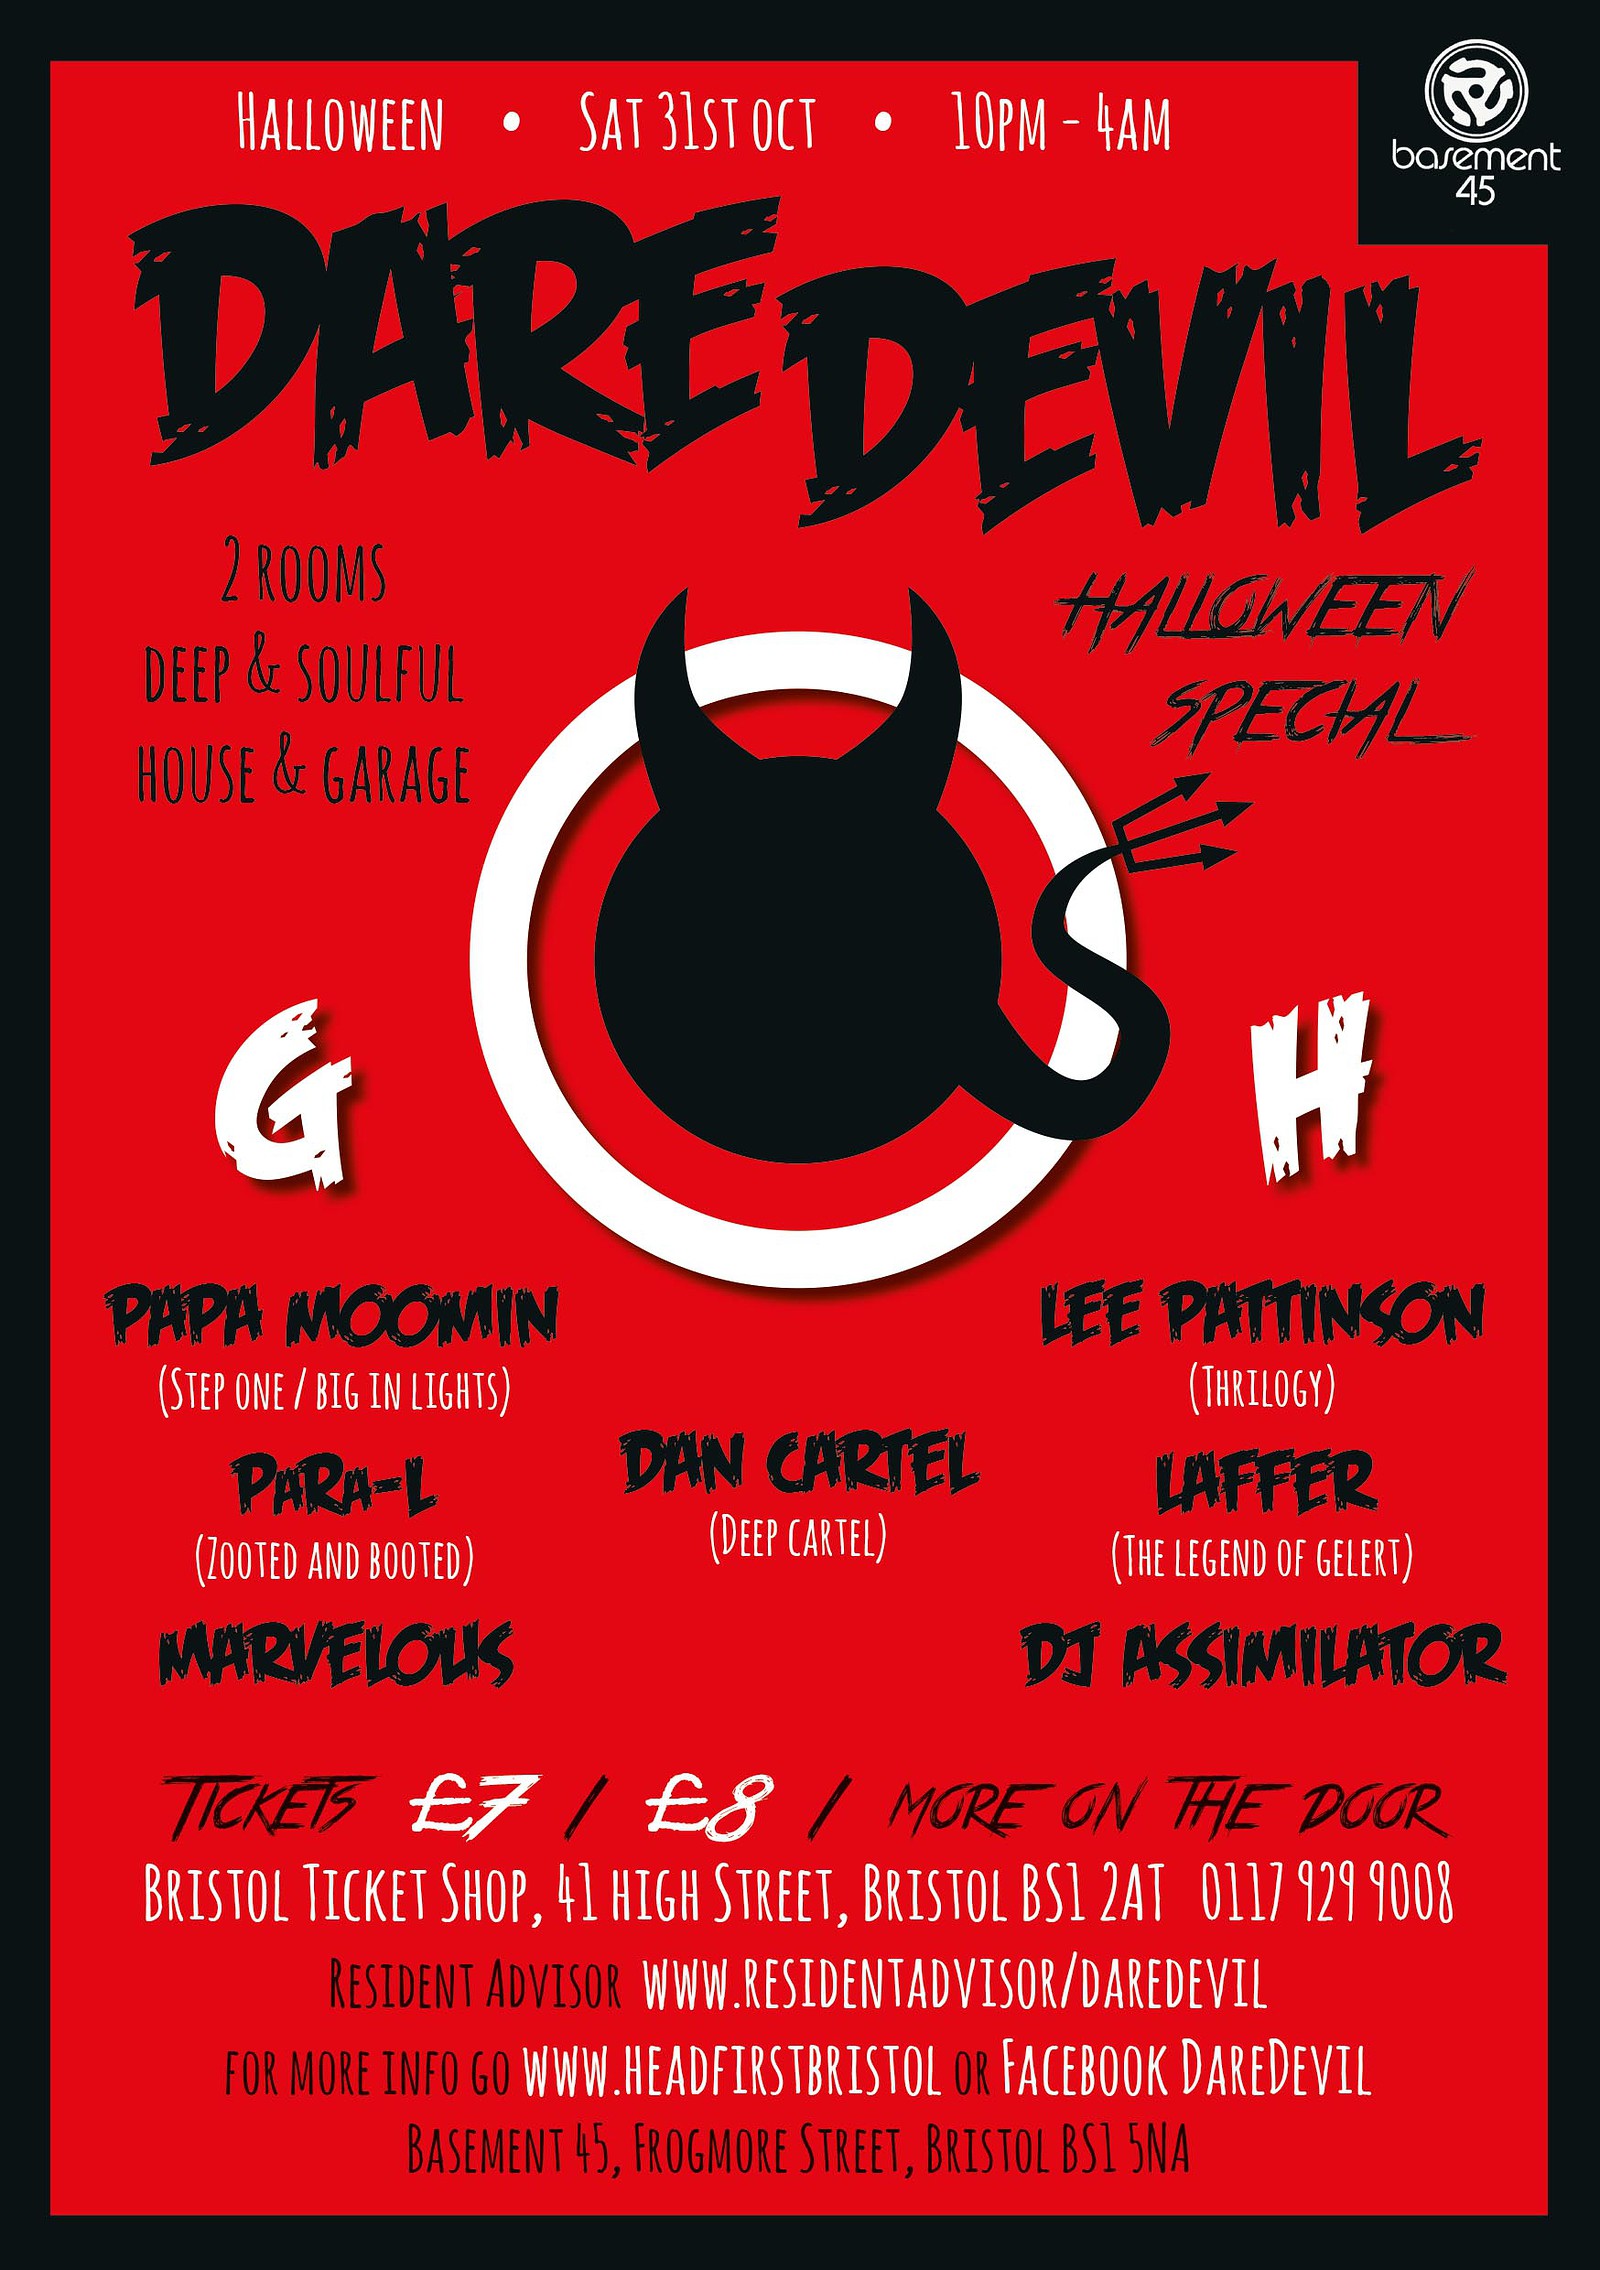 Dare Devil Halloween Special at Basement45